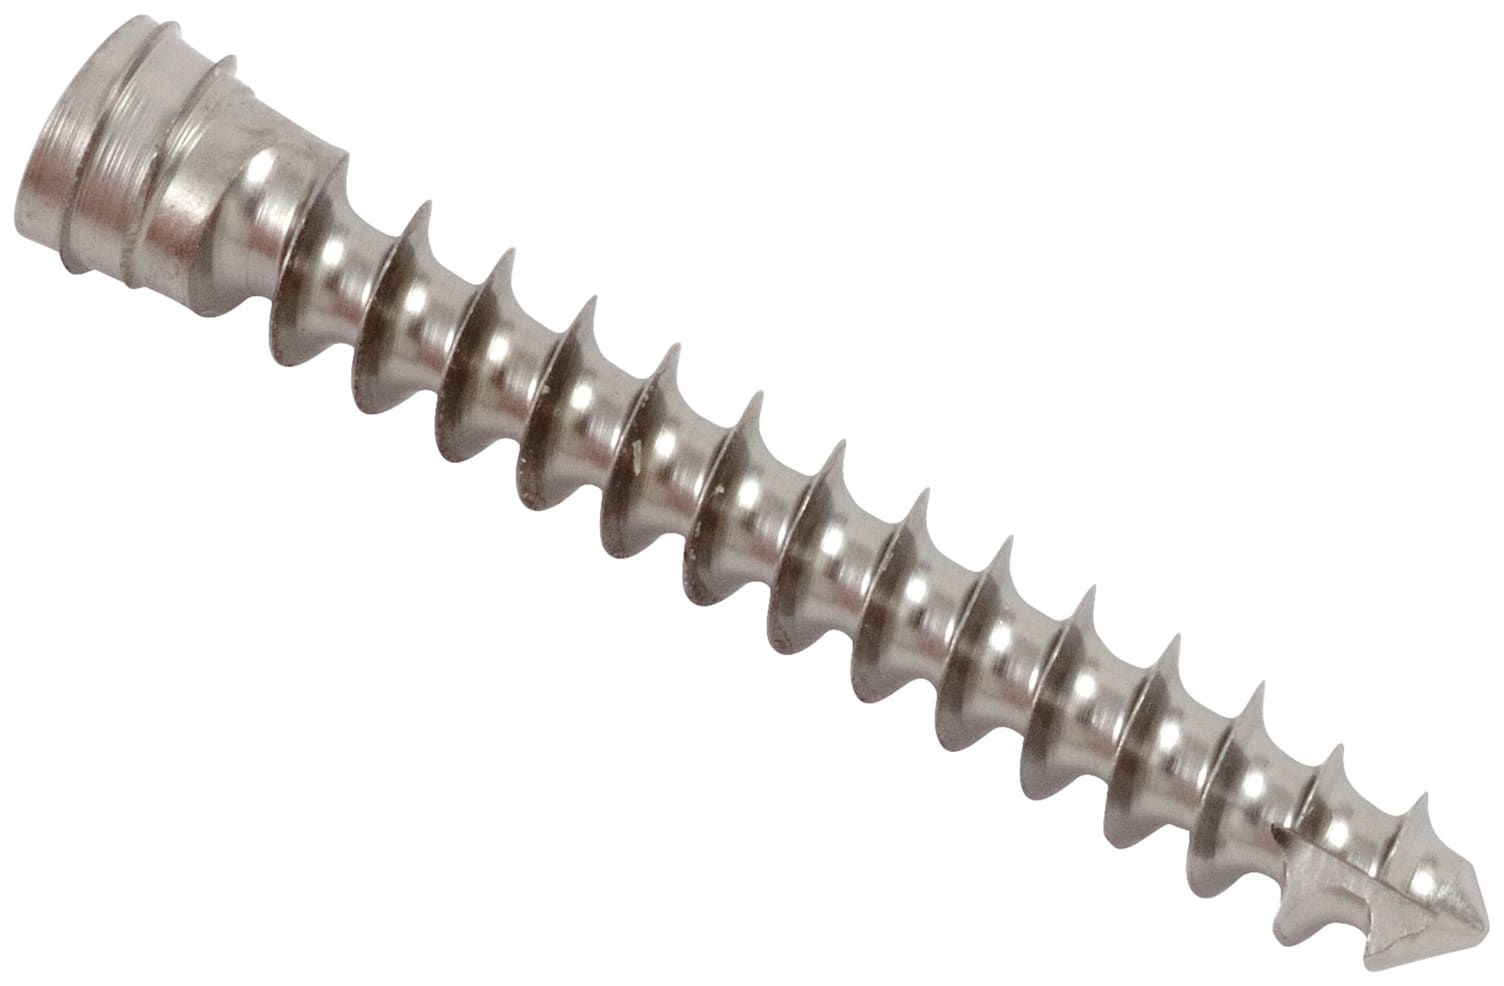 Cancellous Locking Screw, 4 mm x 30 mm